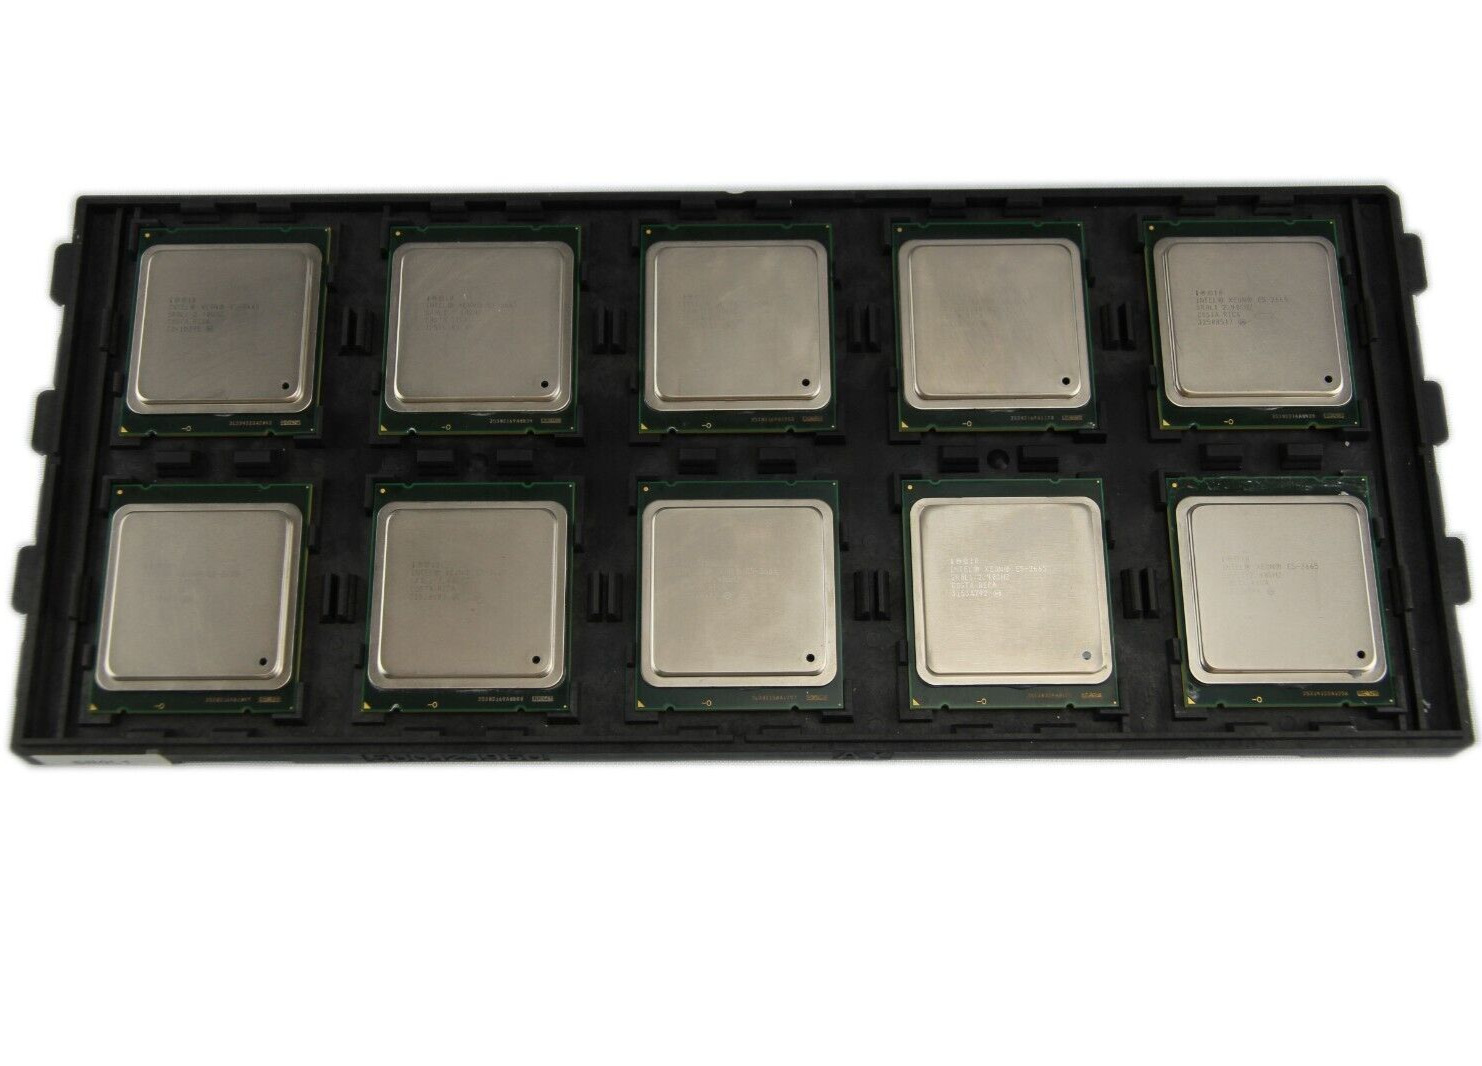 Lot of 10 Intel Xeon E5-2665 2.4GHz 20MB 8-Core 115W LGA2011 SR0L1